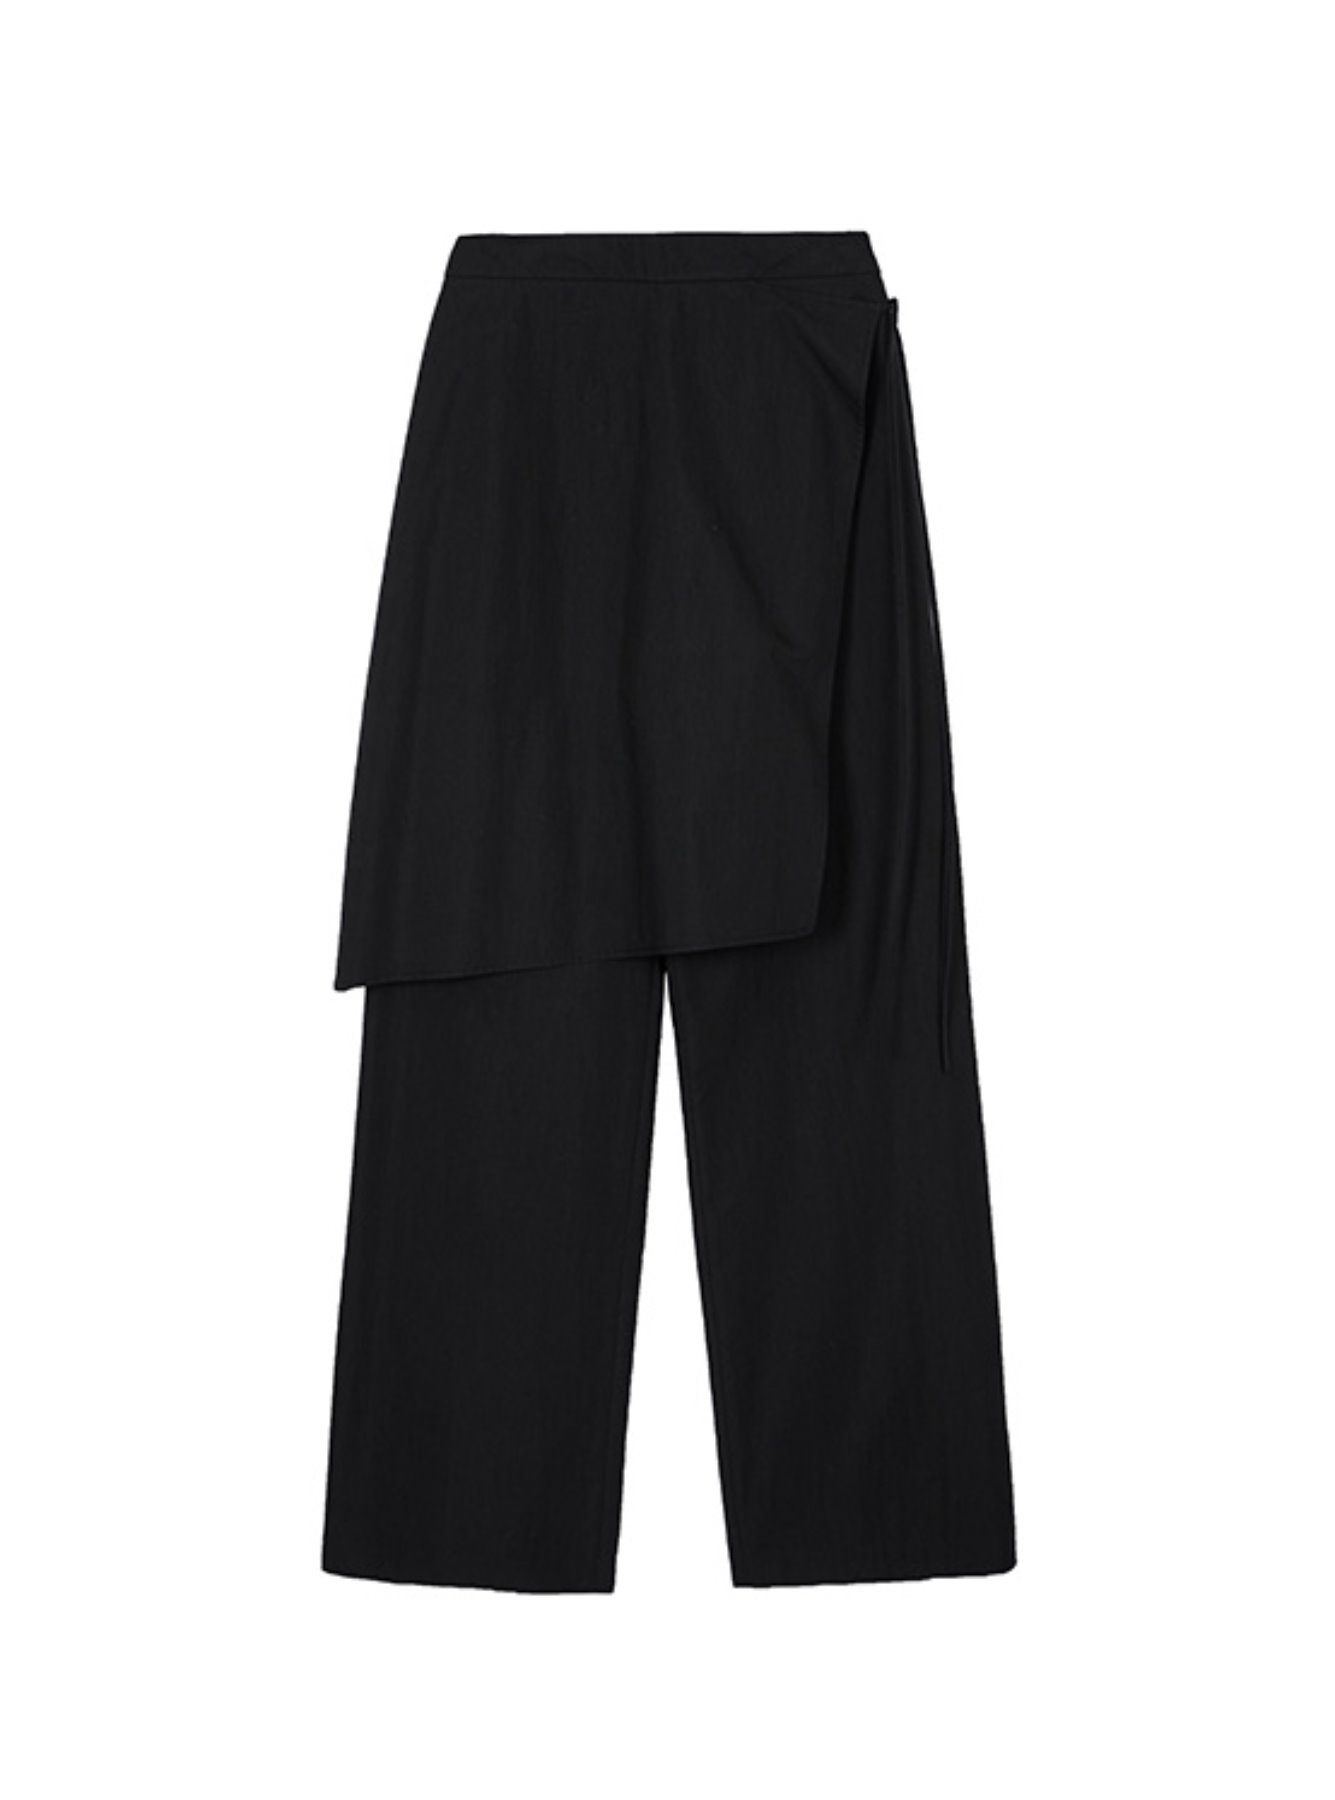 Wrap Skirt Layered Pants in Black VW2SL160-10